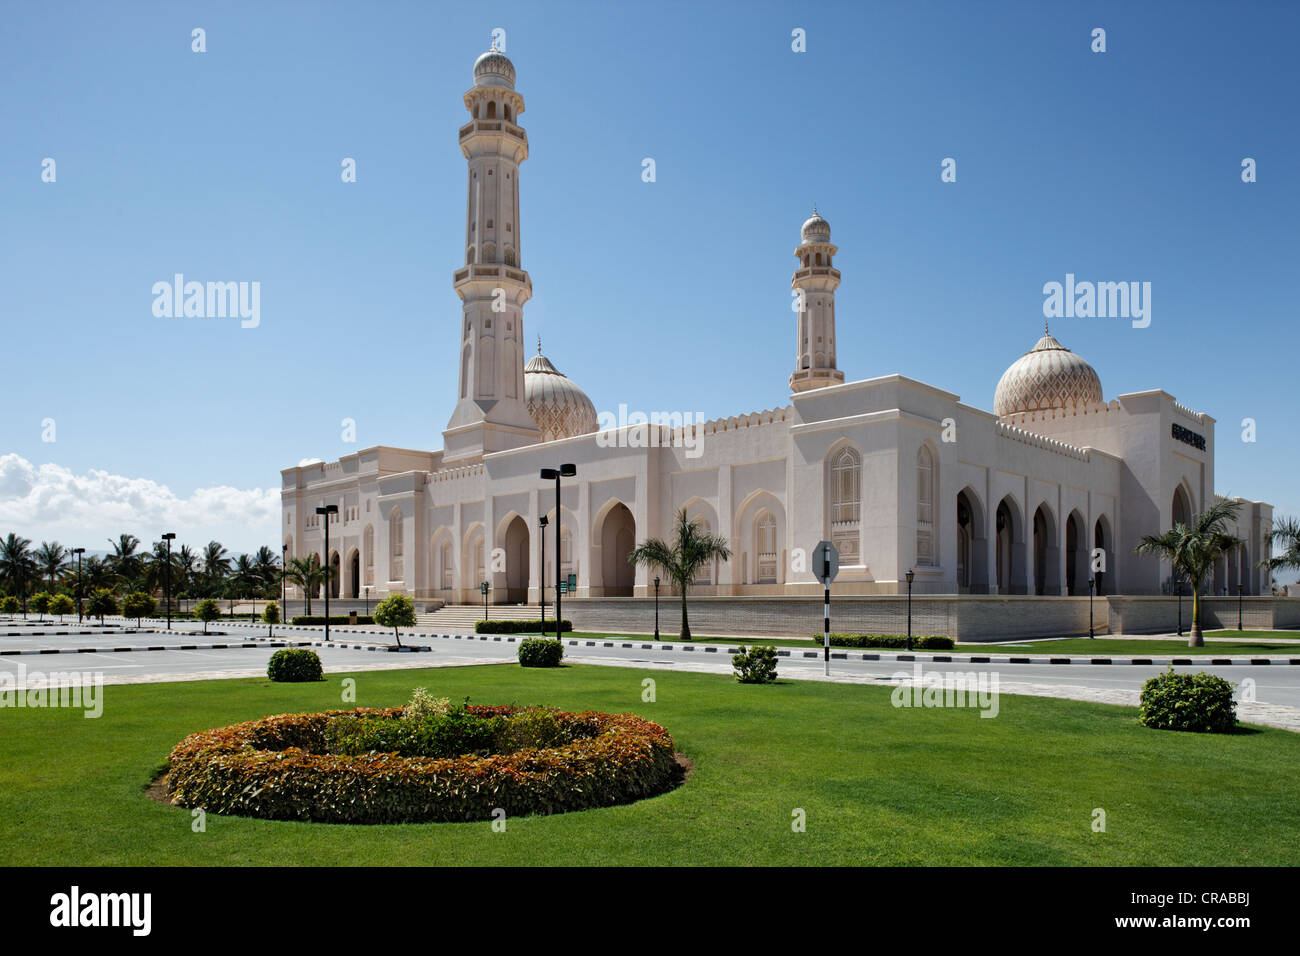 Sultan-Qabus-Moschee mit Blumenbeet an Front, Salalah, Dhofar, Sultanat Oman, Golfstaat, Arabische Halbinsel, Naher Osten Stockfoto